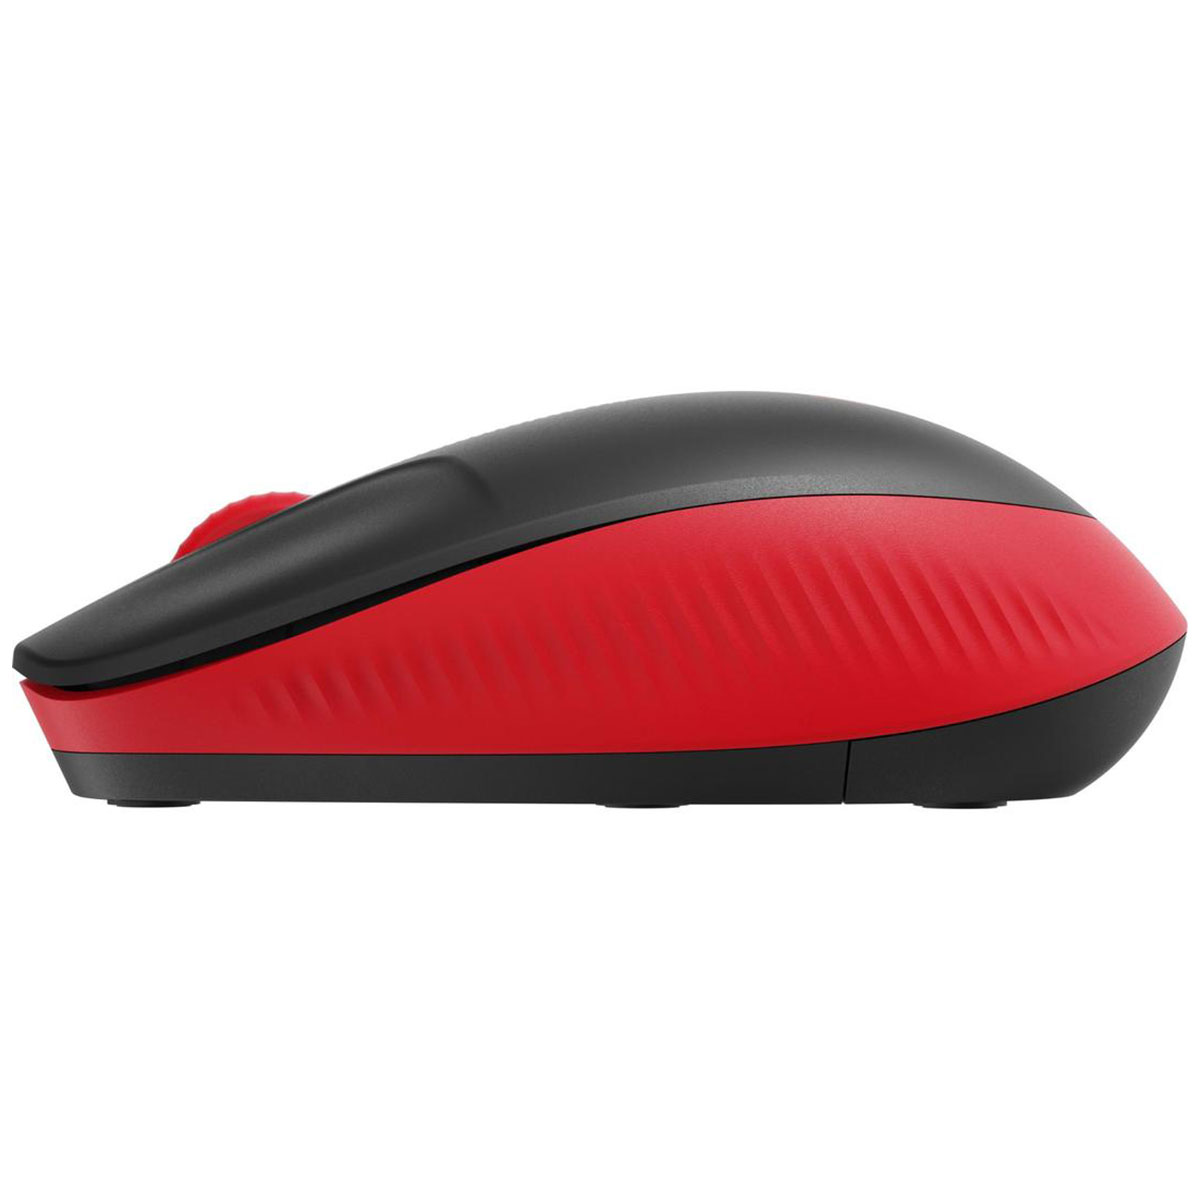 Logitech Mouse M190 Wireless Mouse Full Size Comfort Curve Design 1000 –  Click.com.bn